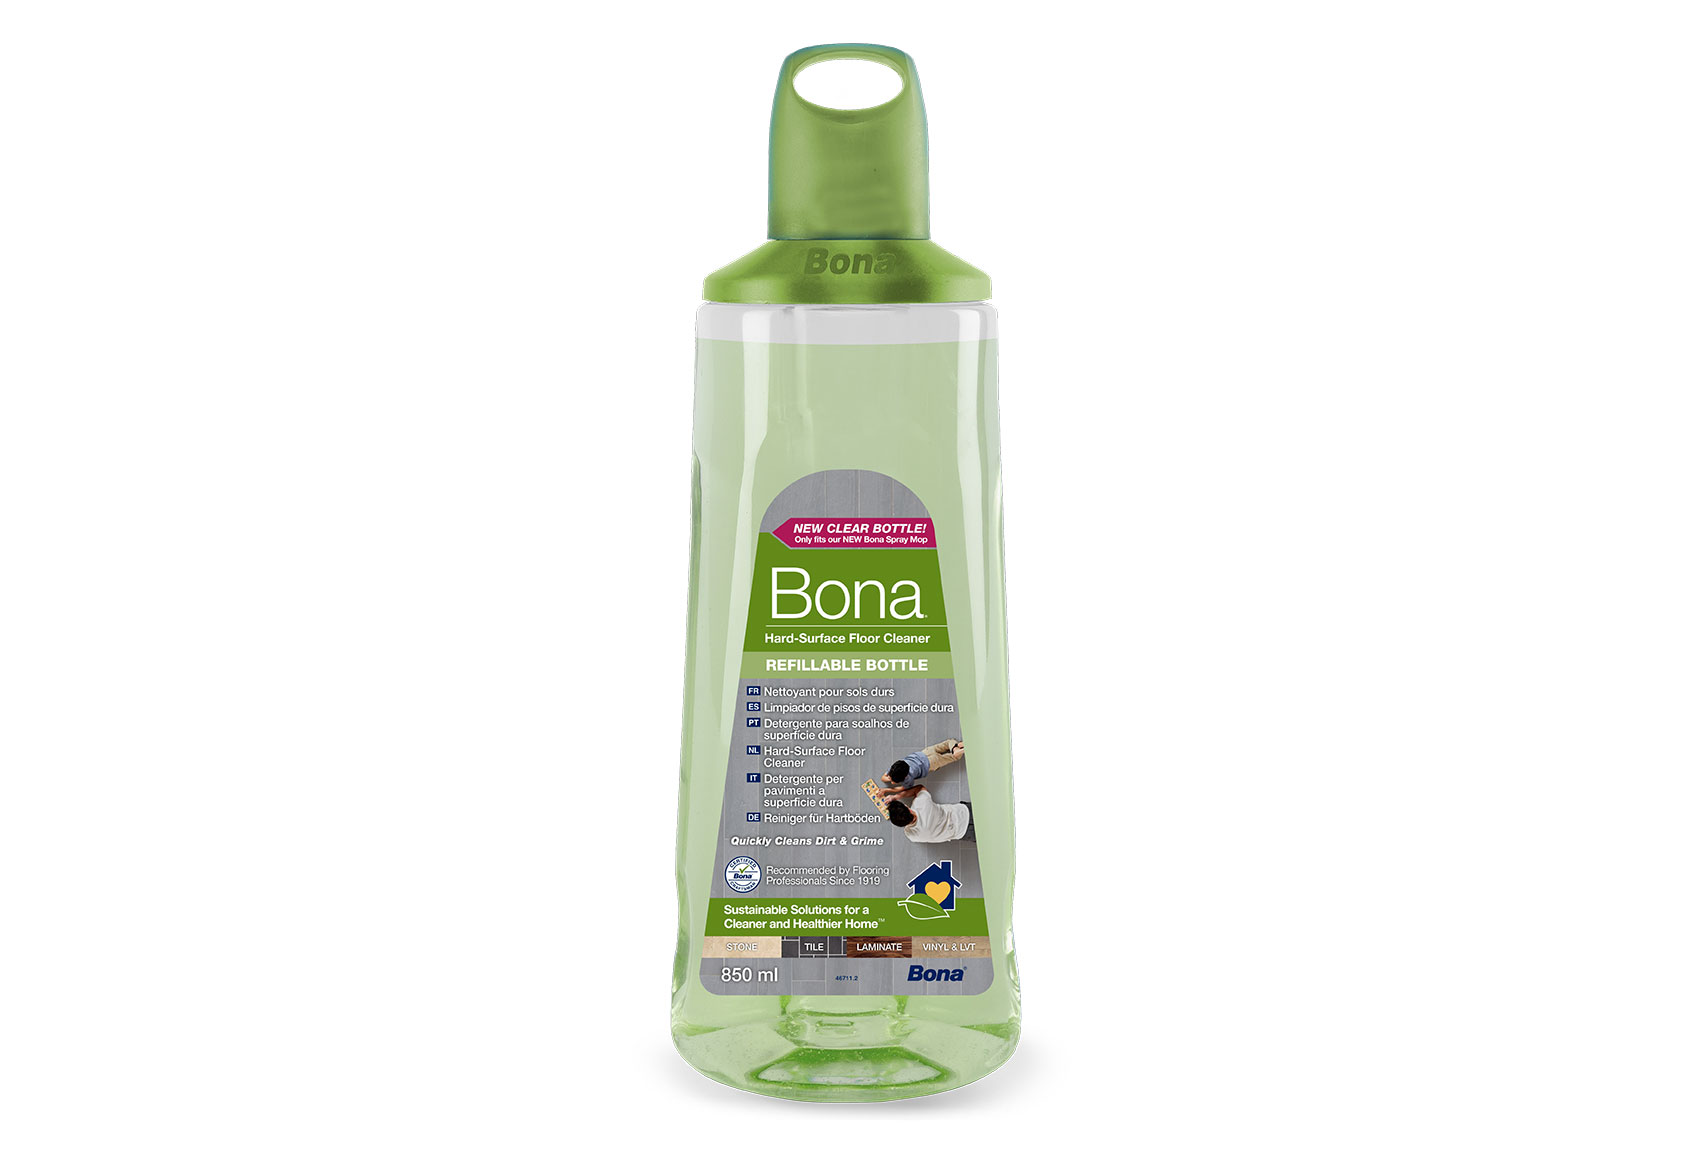 Bona Stone, Tile & Laminate Cleaner 850 ml Mop Refill